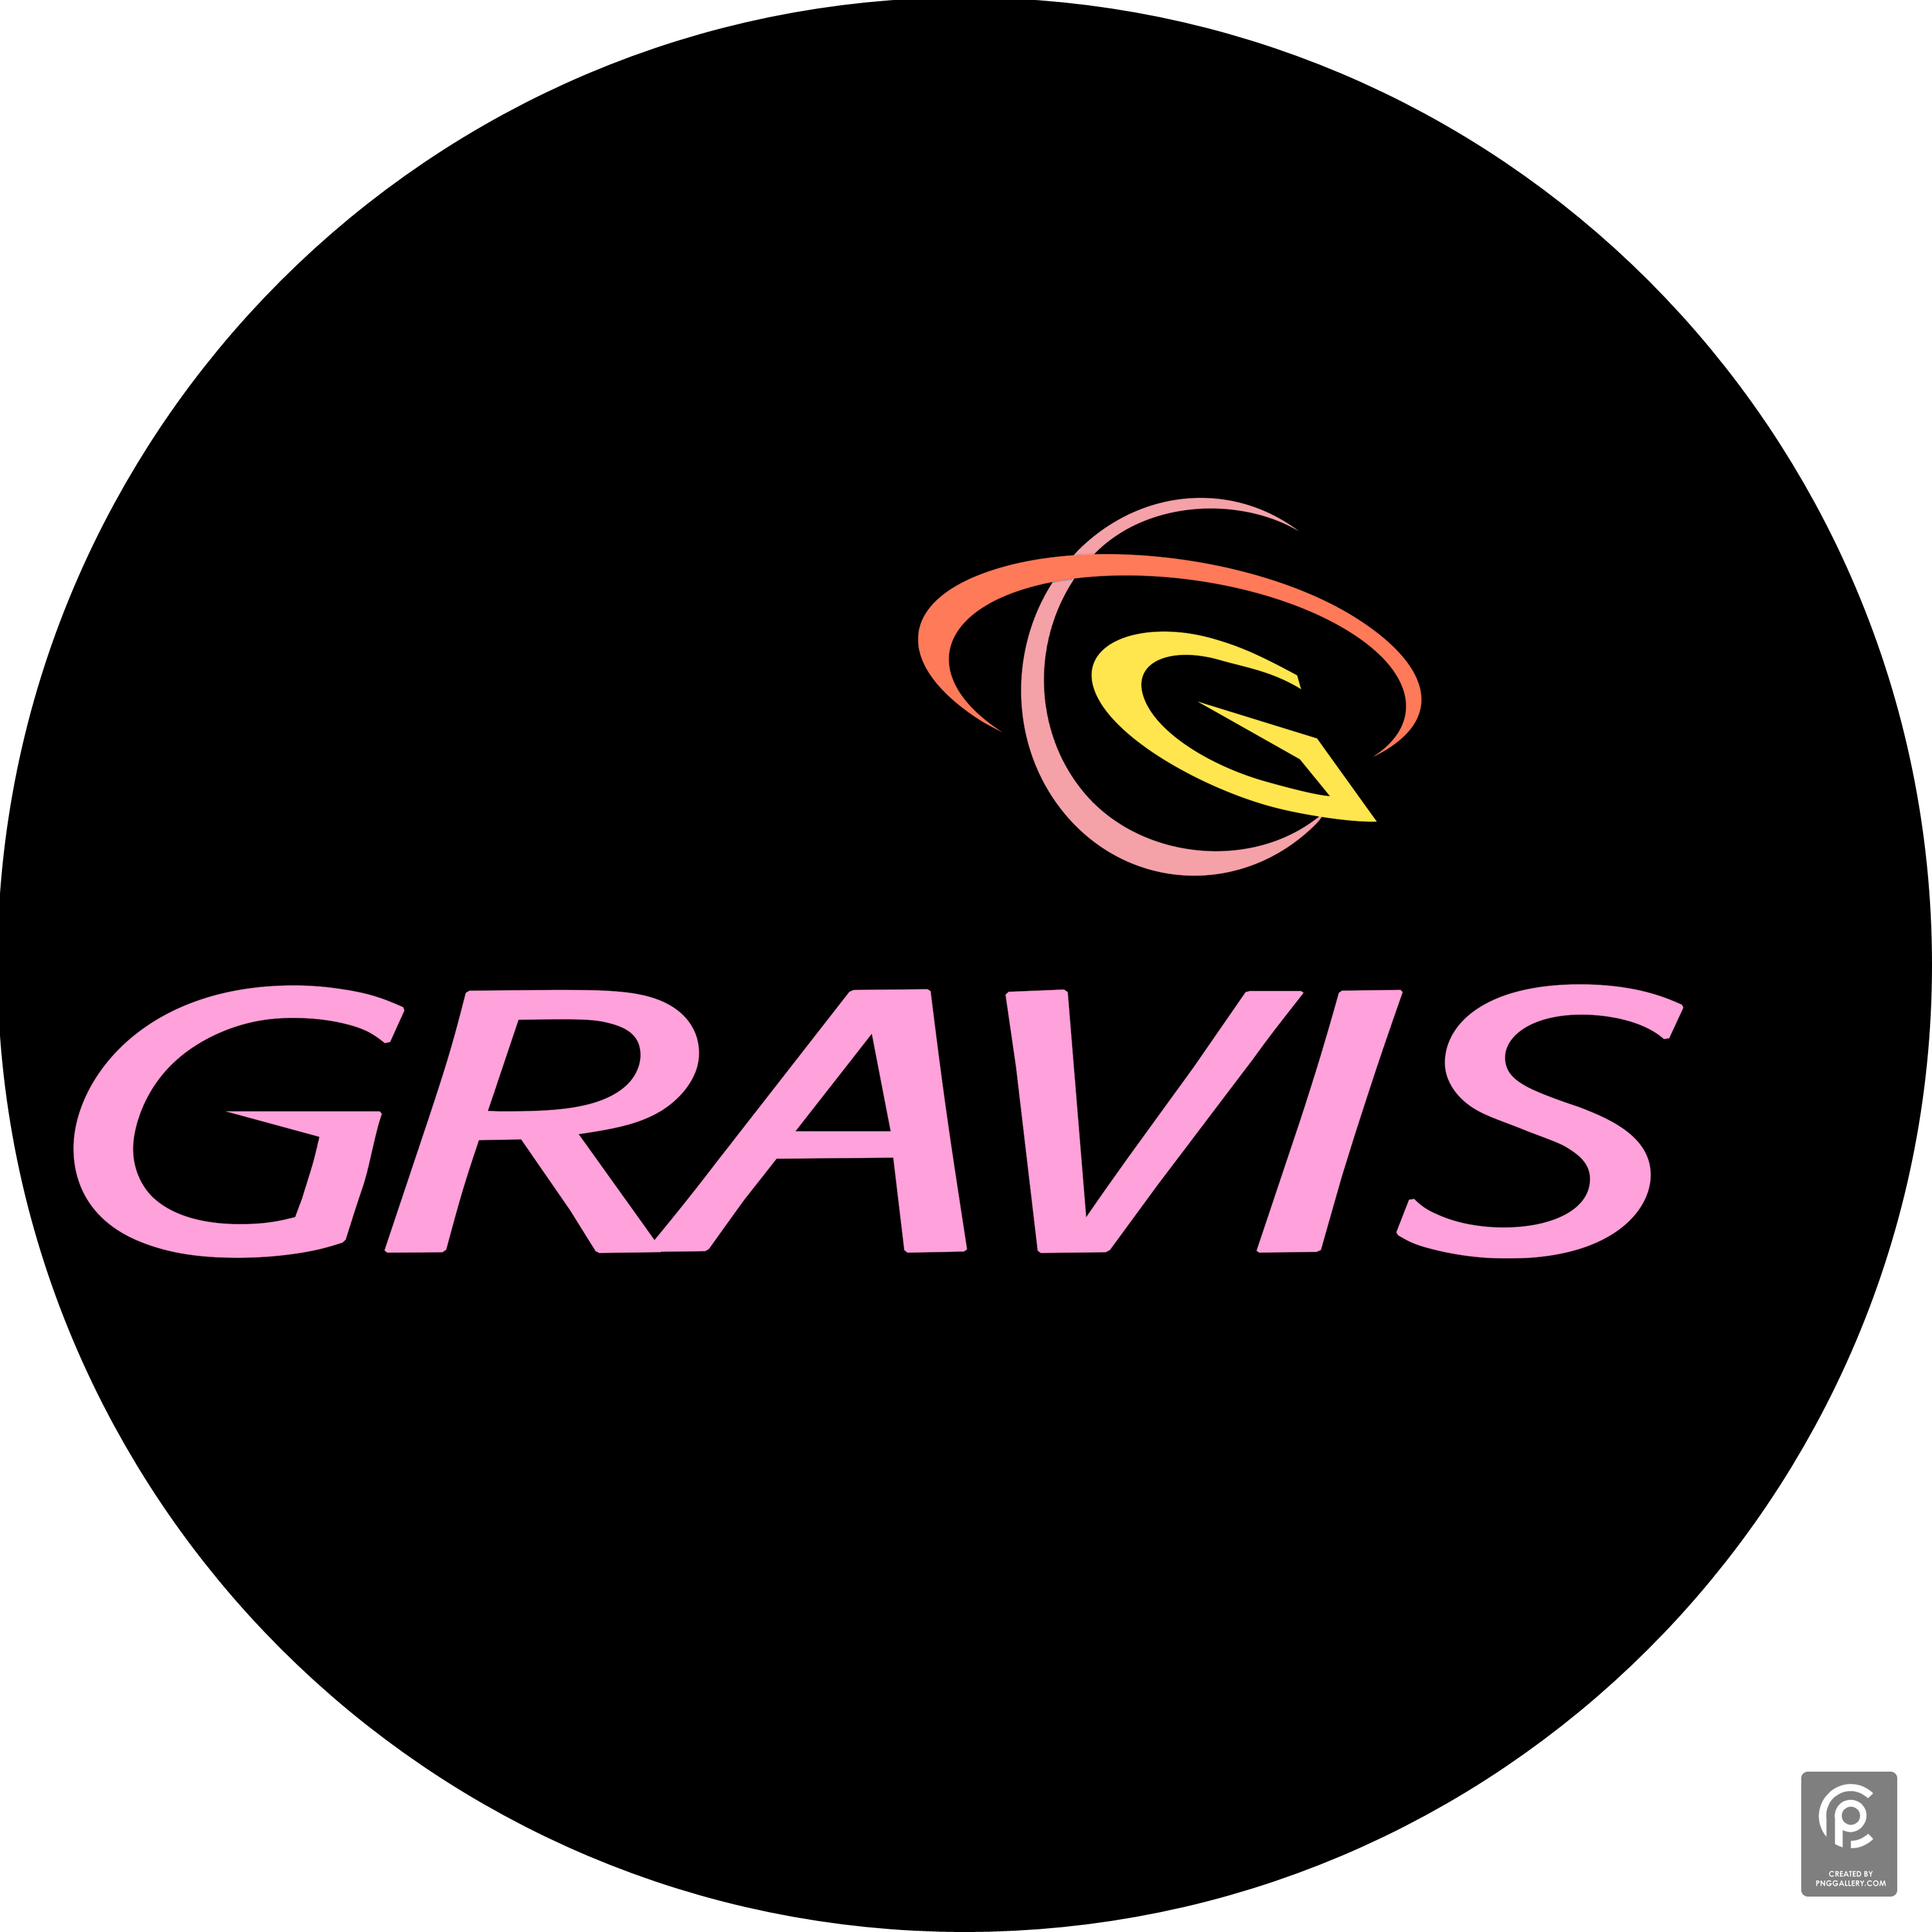 Advanced Gravis Computer Technology Logo Transparent Gallery